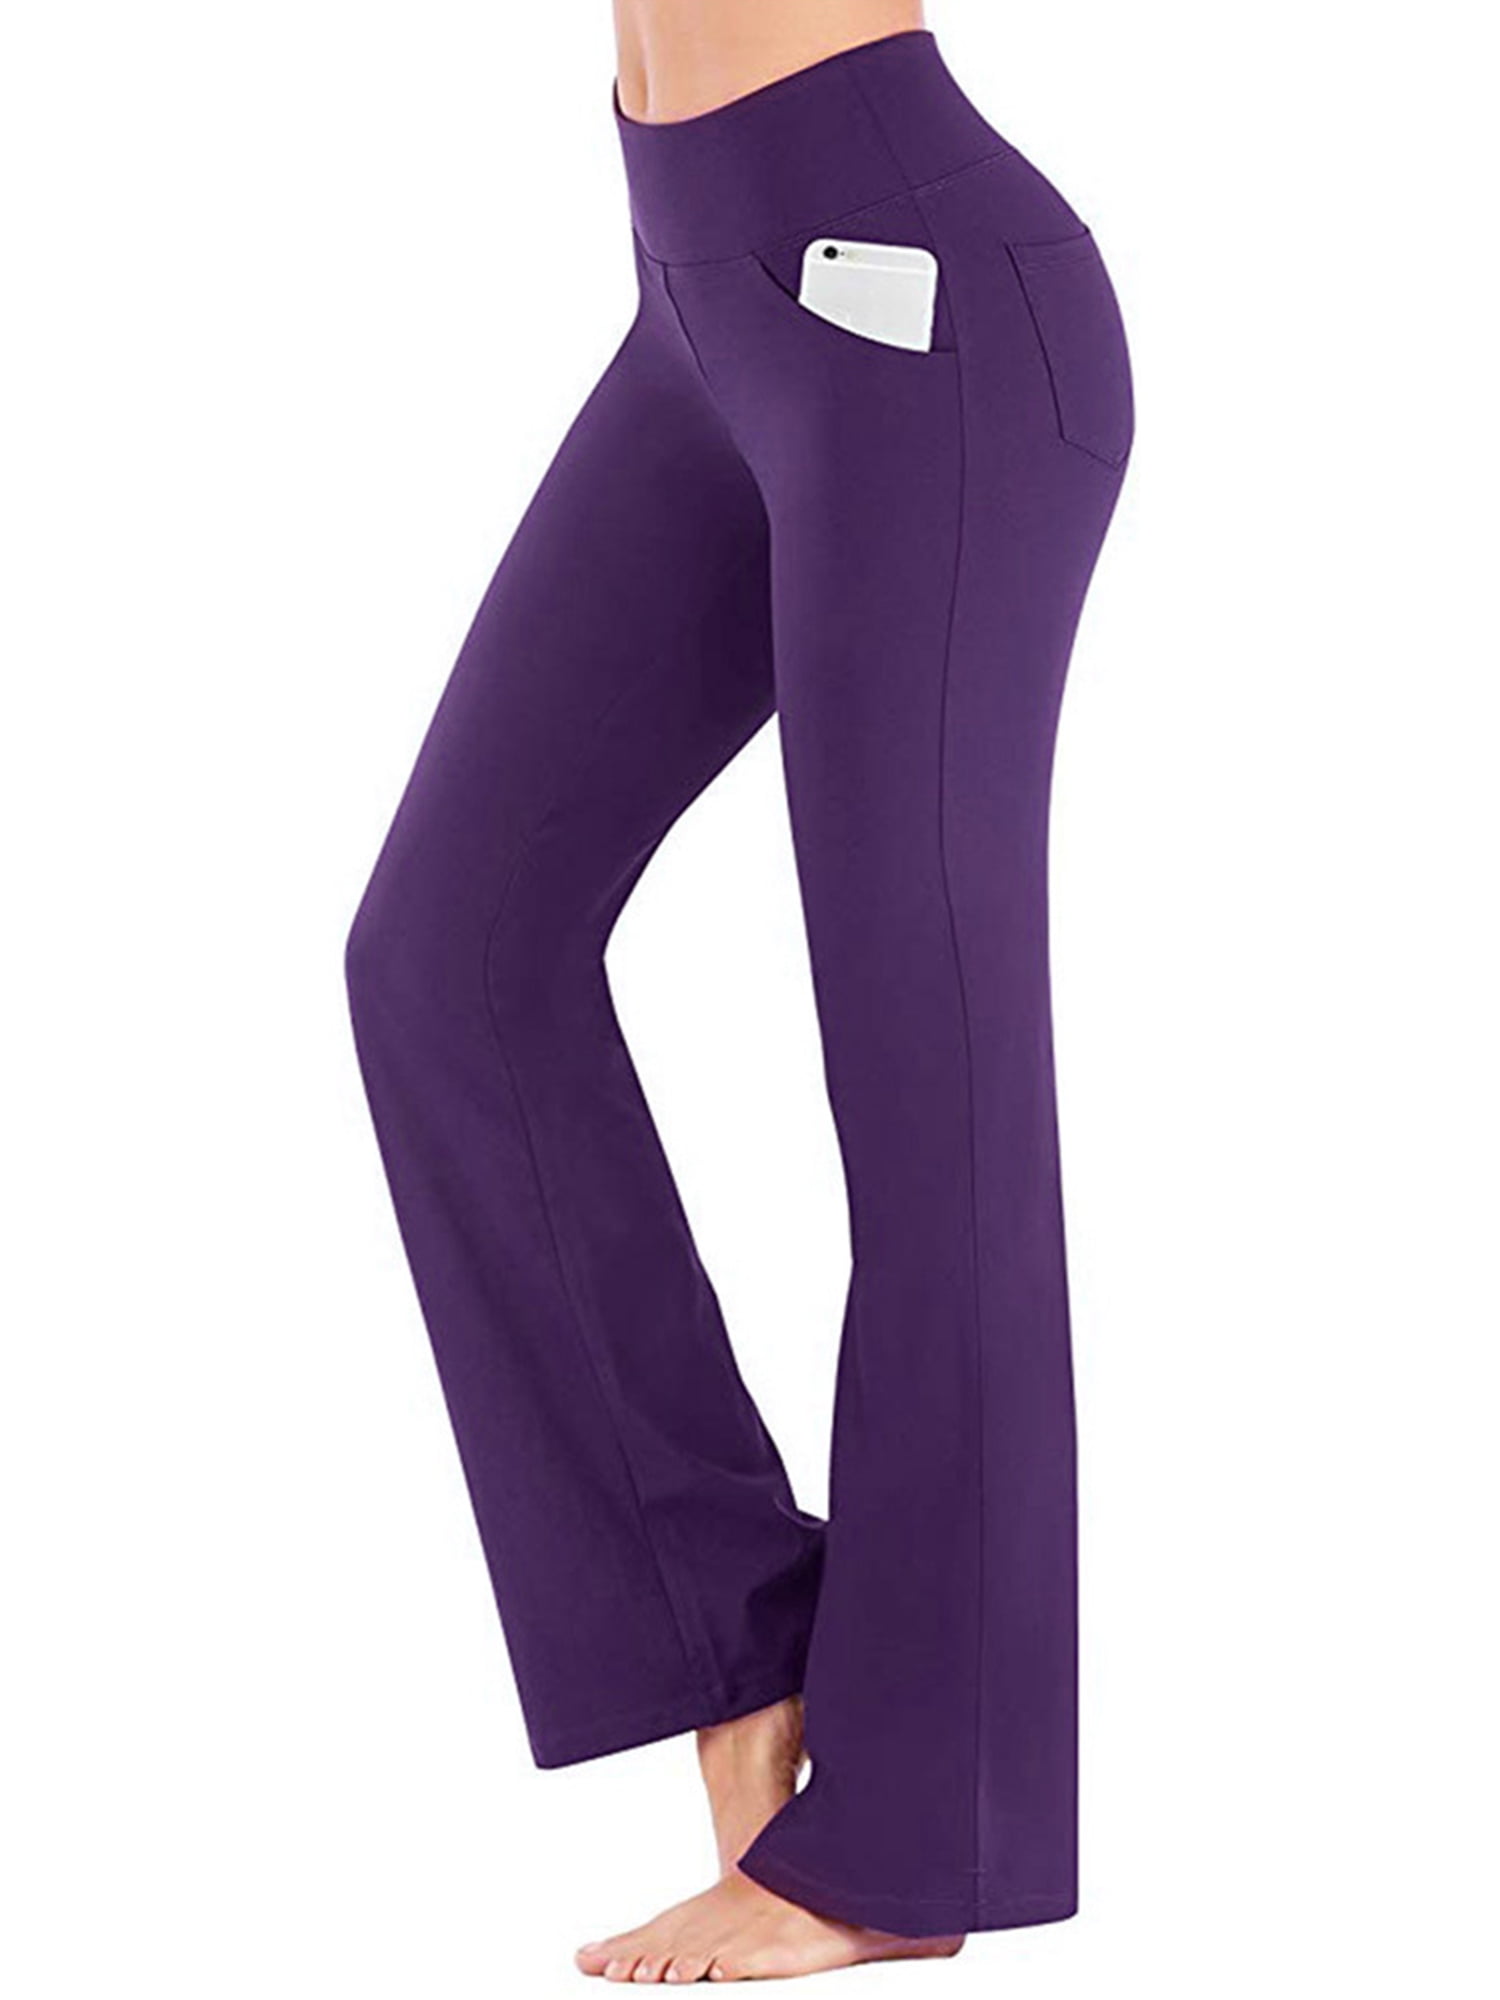 Buy OUMSHBIWomens Bouquet Foot Pants Pocket Yoga Fitness Pants for